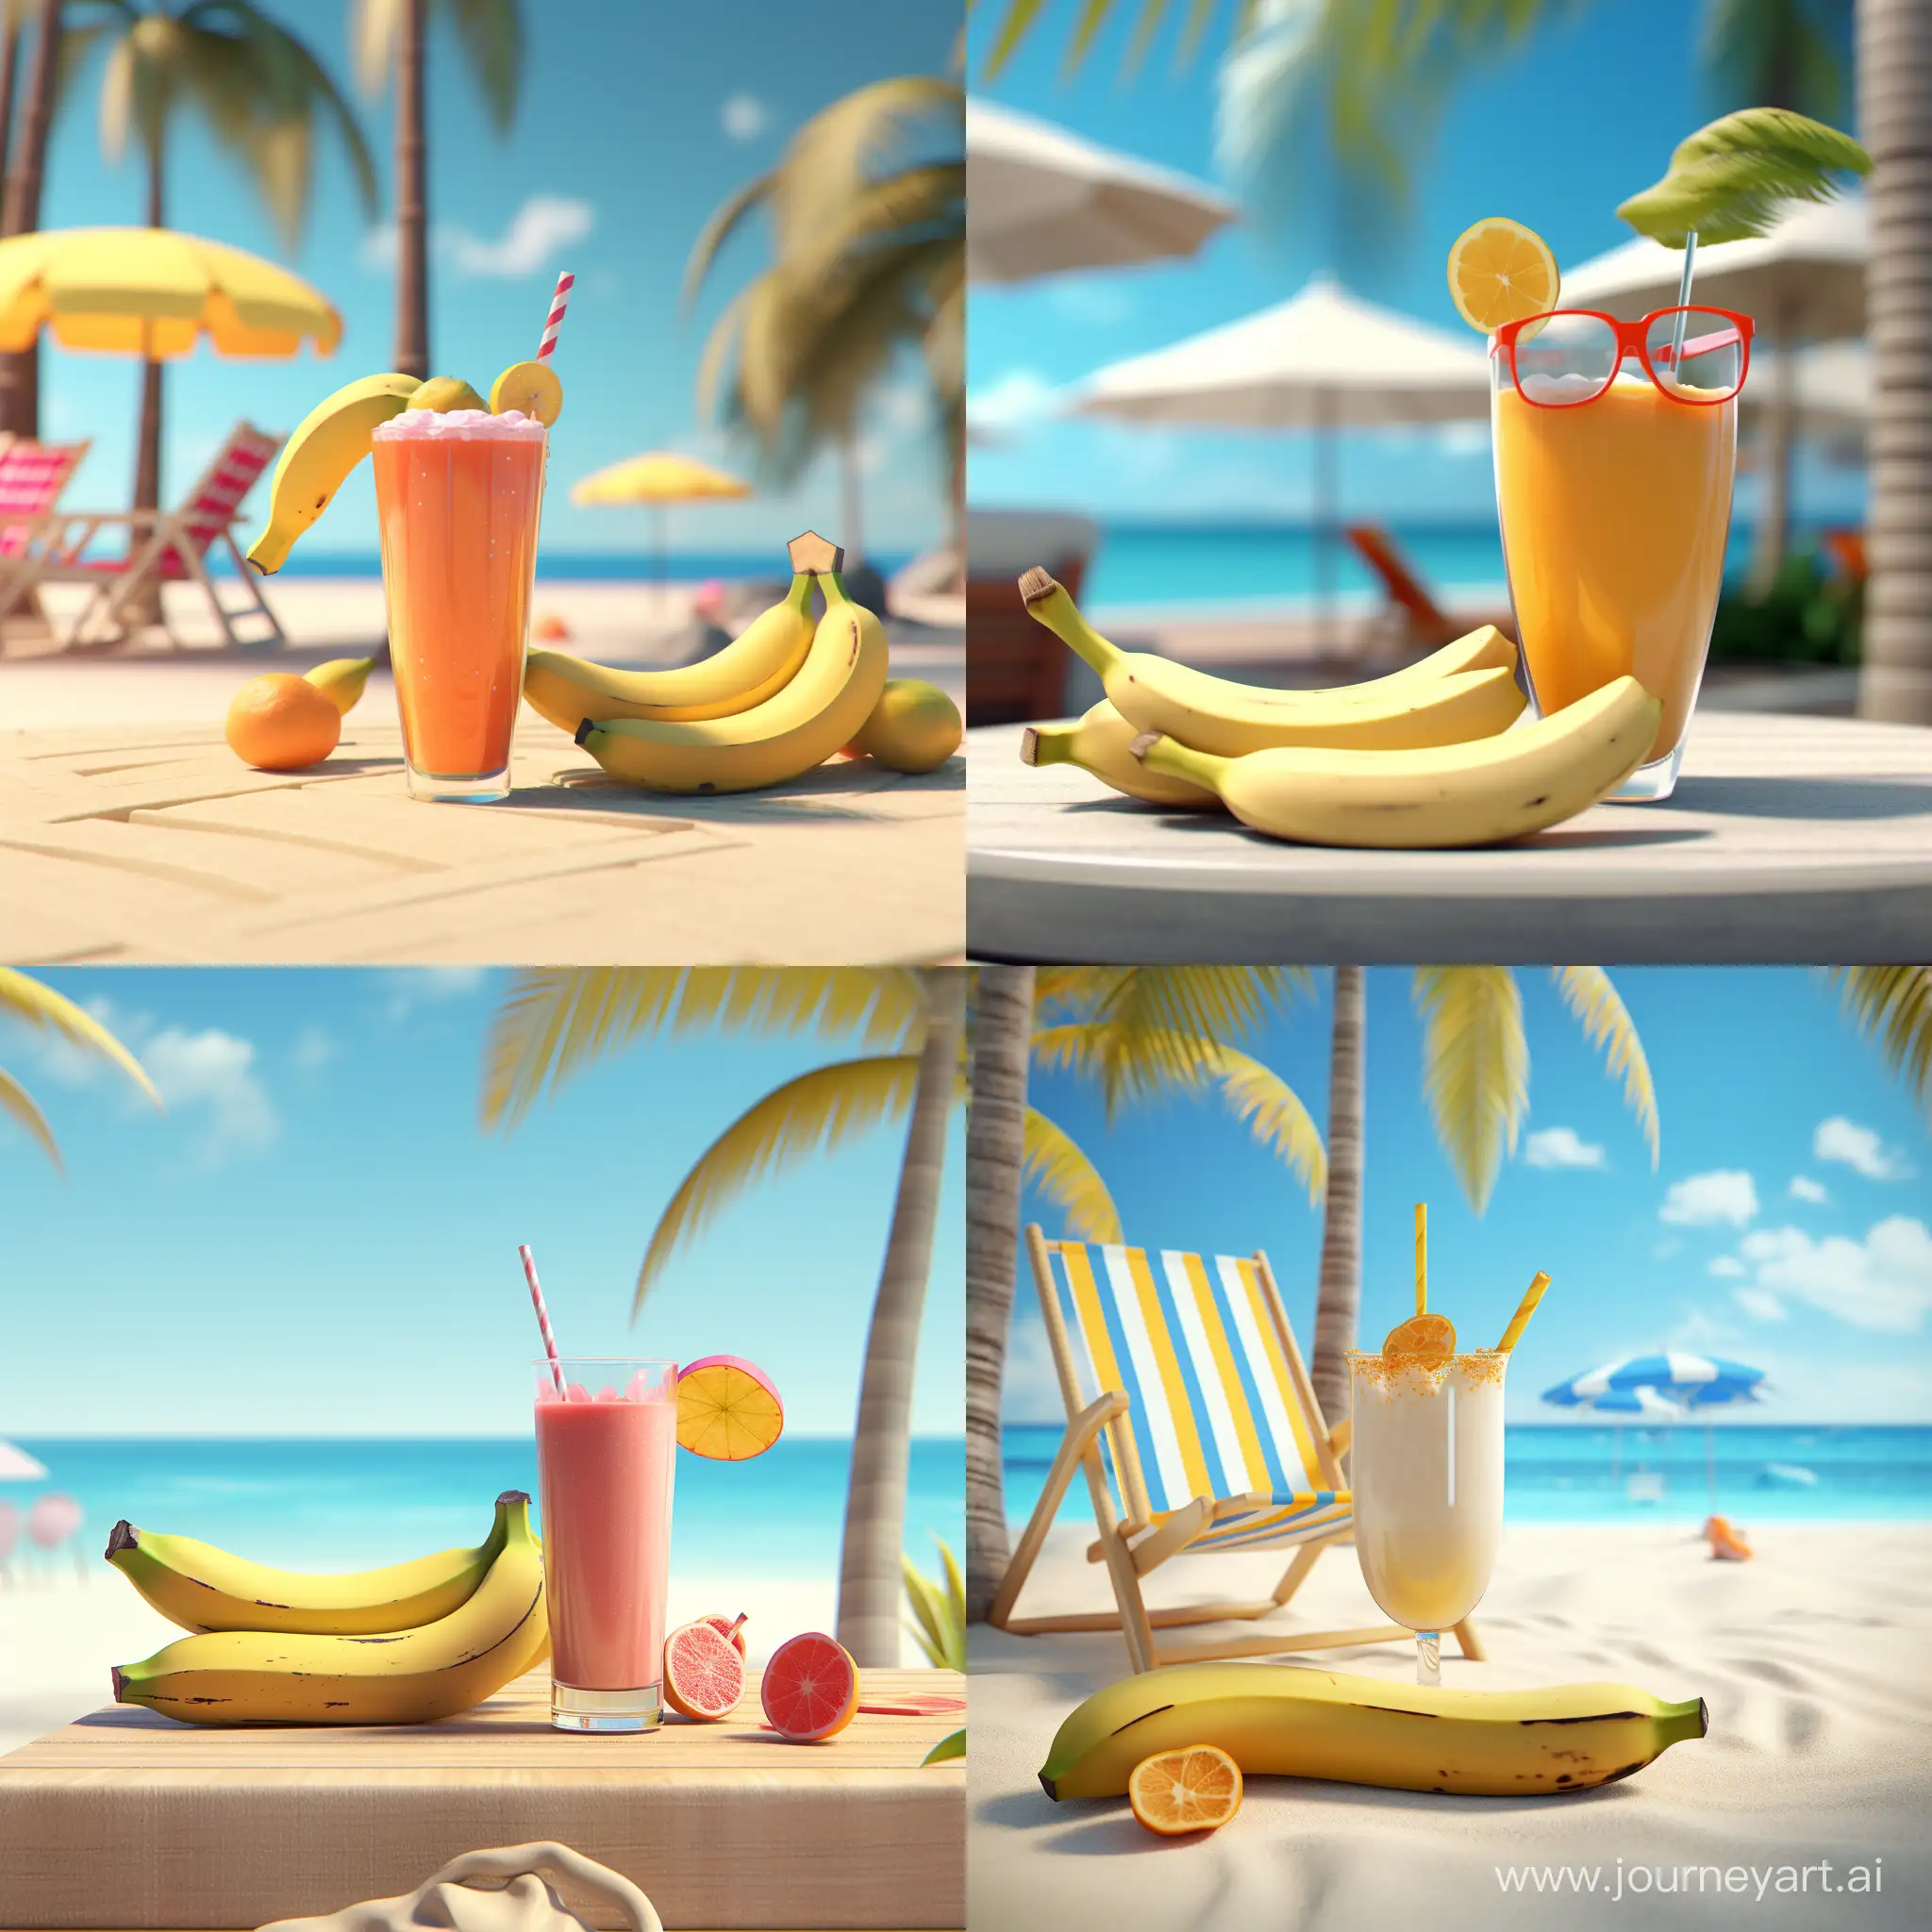 Tropical-Banana-Enjoying-a-Refreshing-Smoothie-on-the-Beach